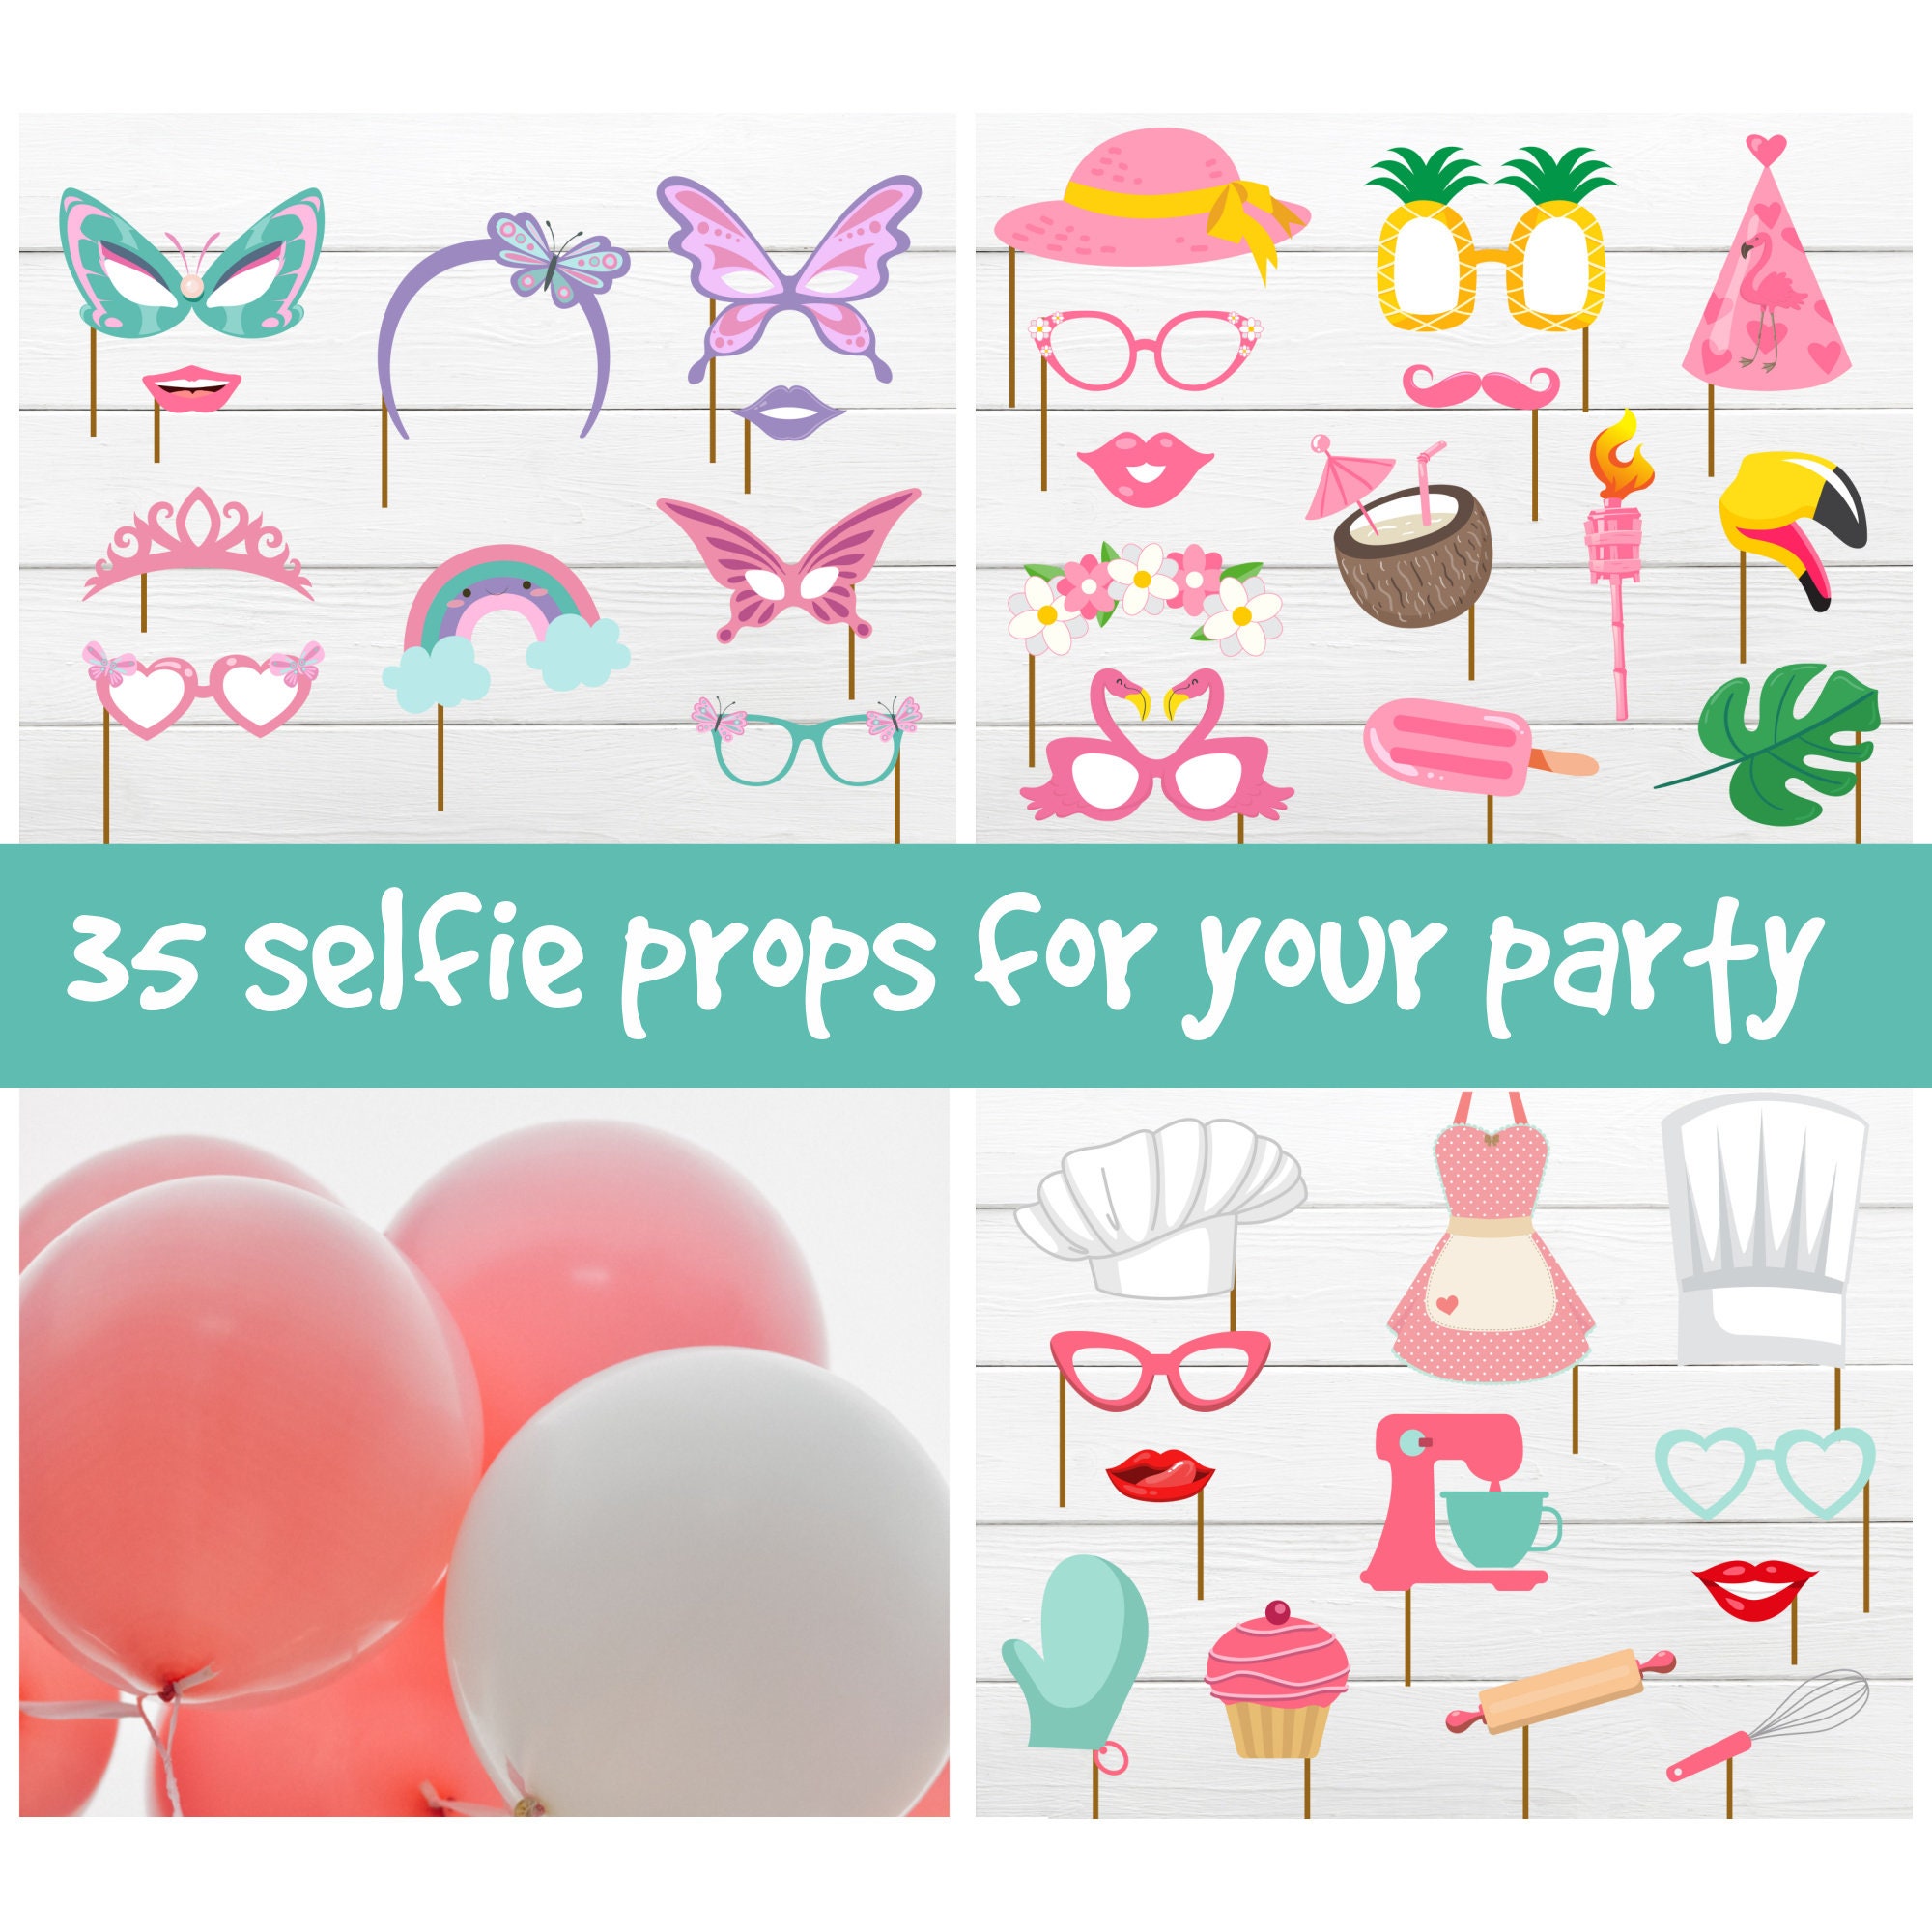 Jazzoo Slumber Party Decoration Kit - Includes Photography Backdrop & 10 Studio Selfie Photo Booth Props with Sticks - Sleepover Squad Pajama Girl